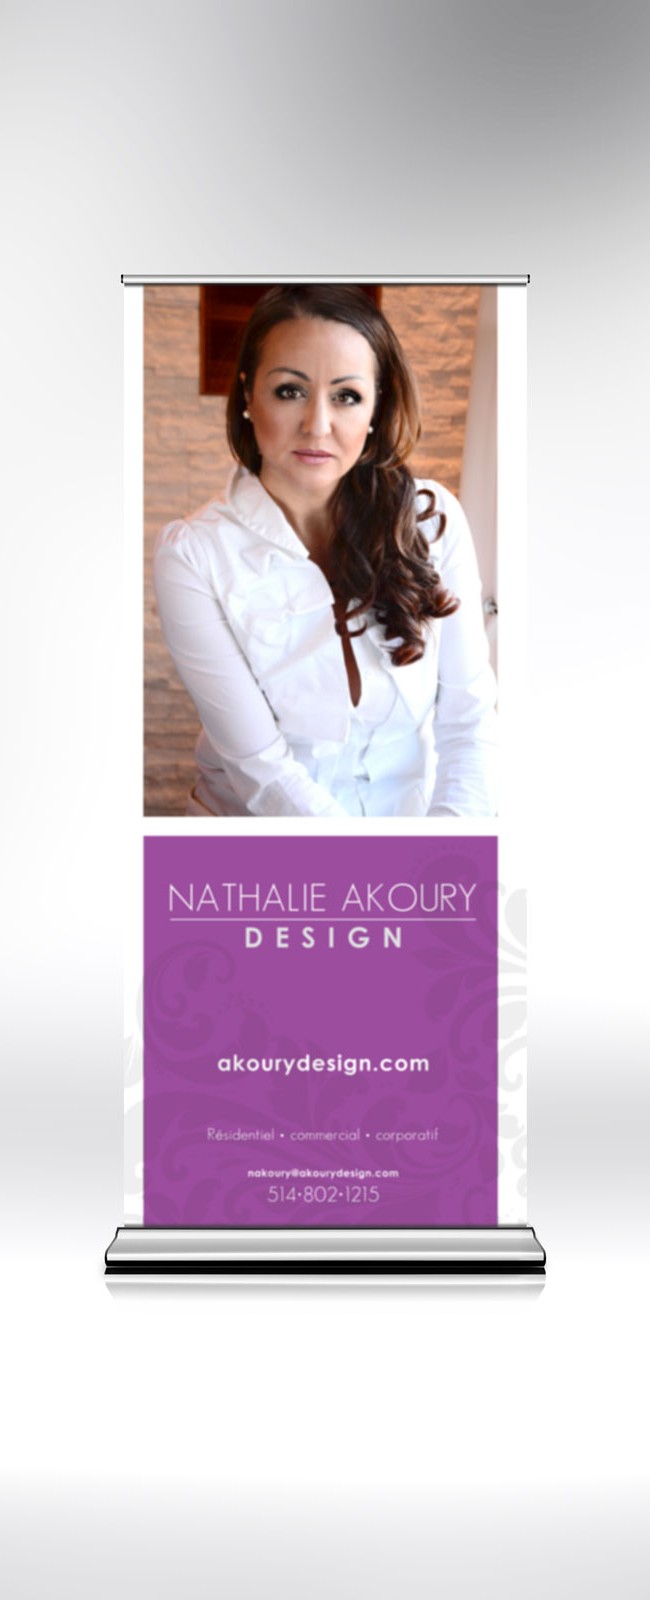 Nathalie Akoury